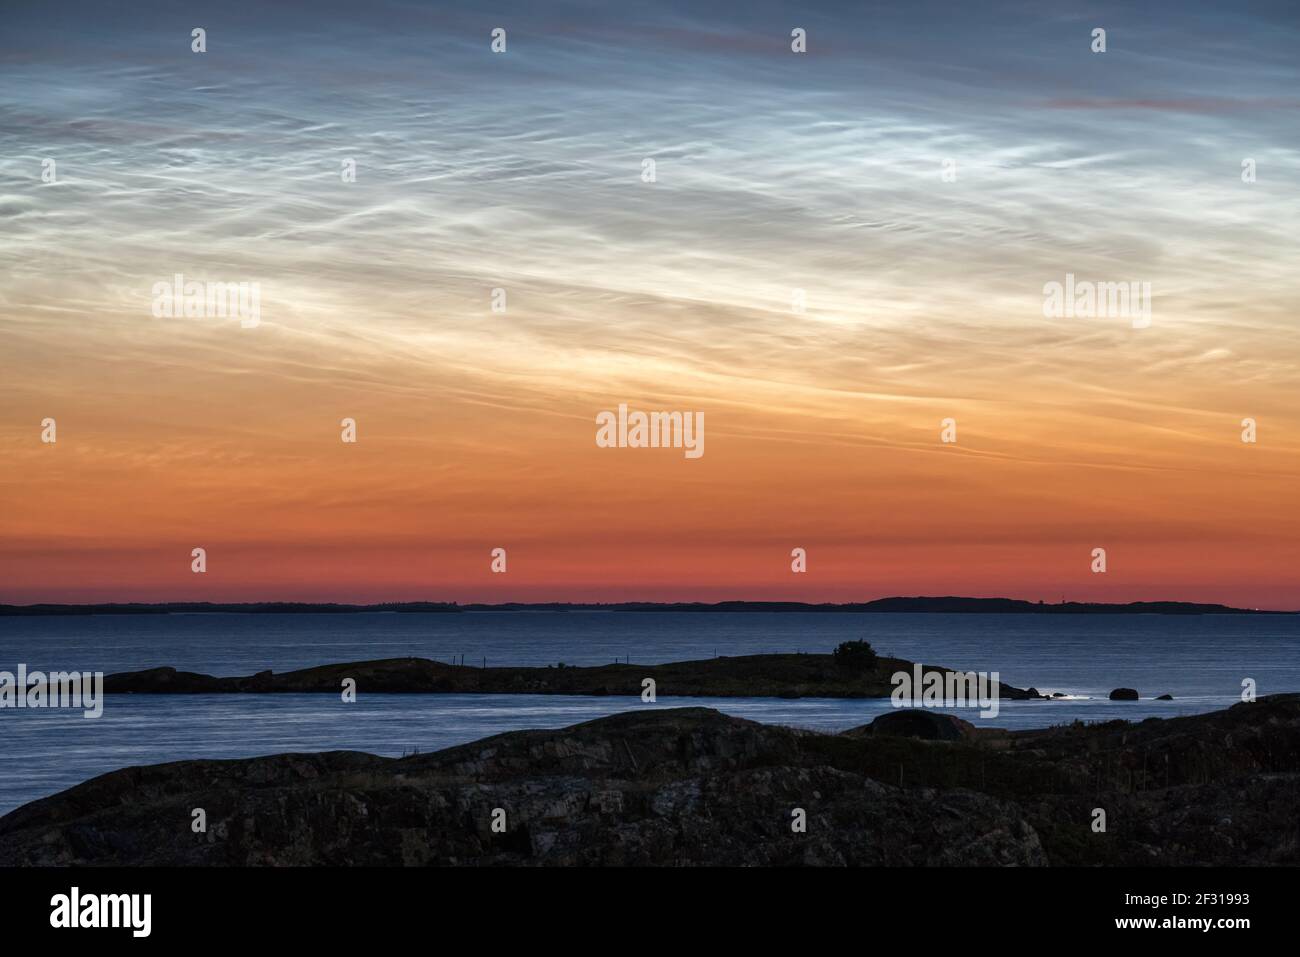 Illuminating night clouds seen from Jurmo island, Parainen, Finland Stock Photo